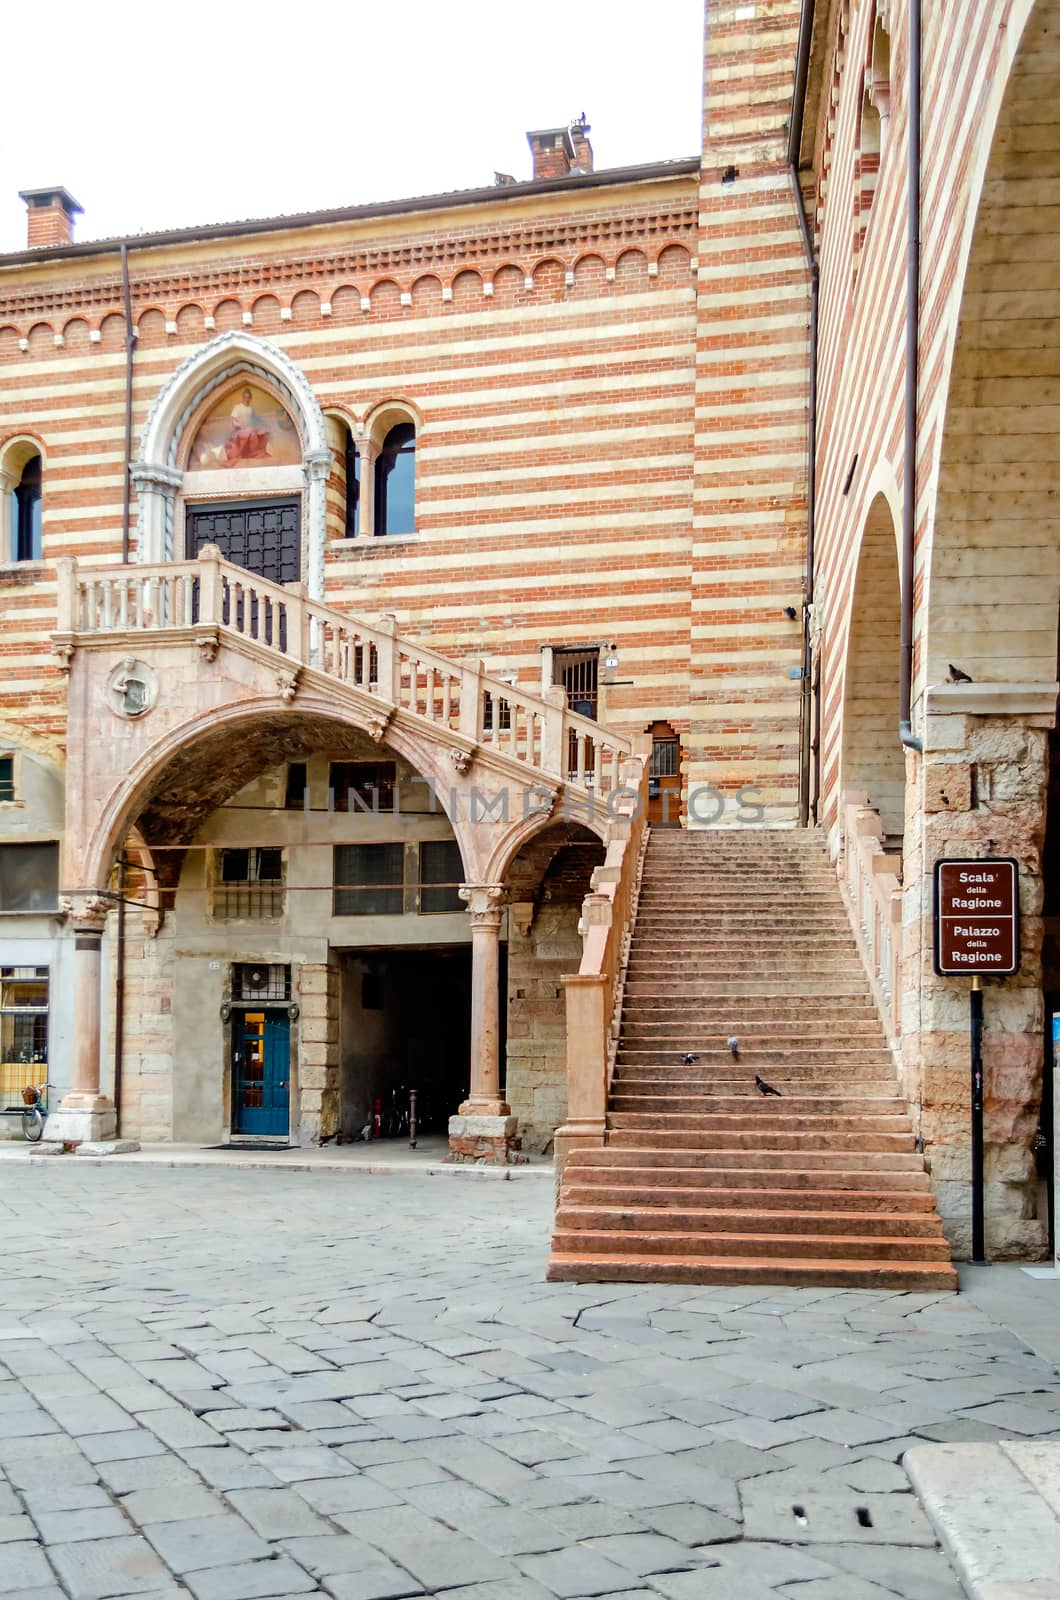 Stairs at Palazzo della Ragione, Verona, Italy by marcorubino